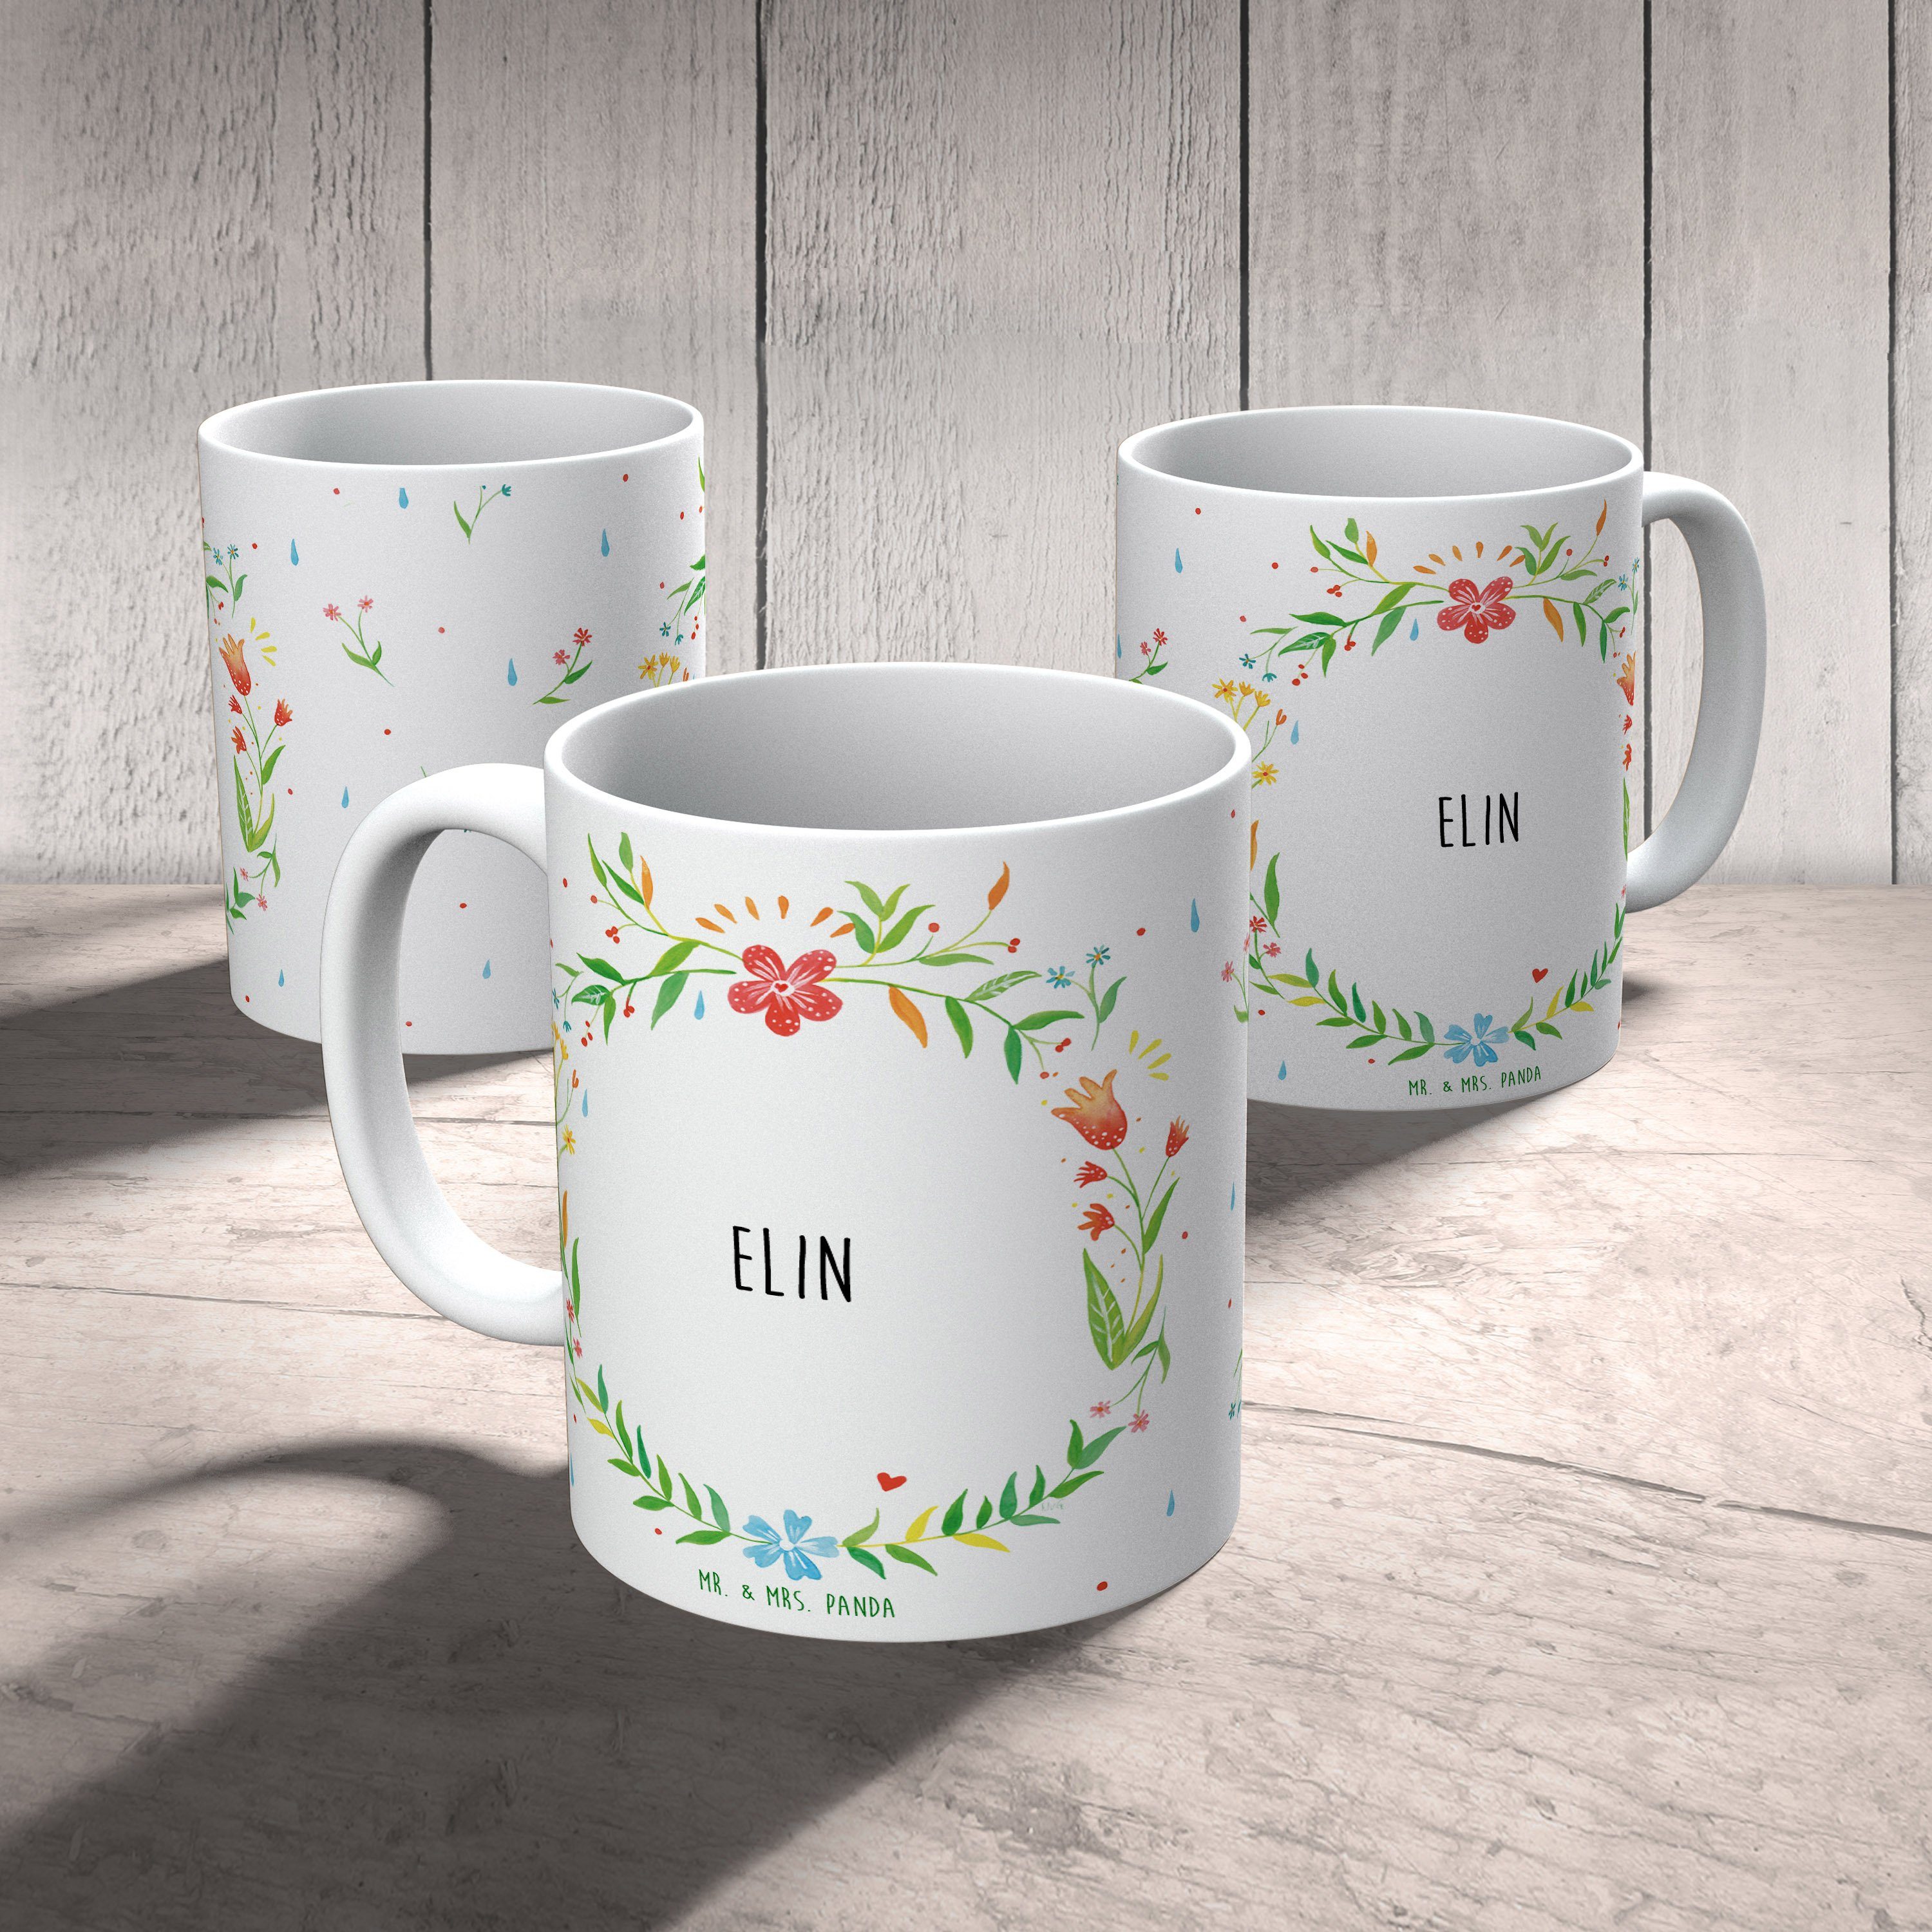 Mr. Elin Tasse Tasse Keramik Motive, Keramiktasse, Mrs. & - Panda Tasse, Geschenk, Kaffeebecher, Tas,